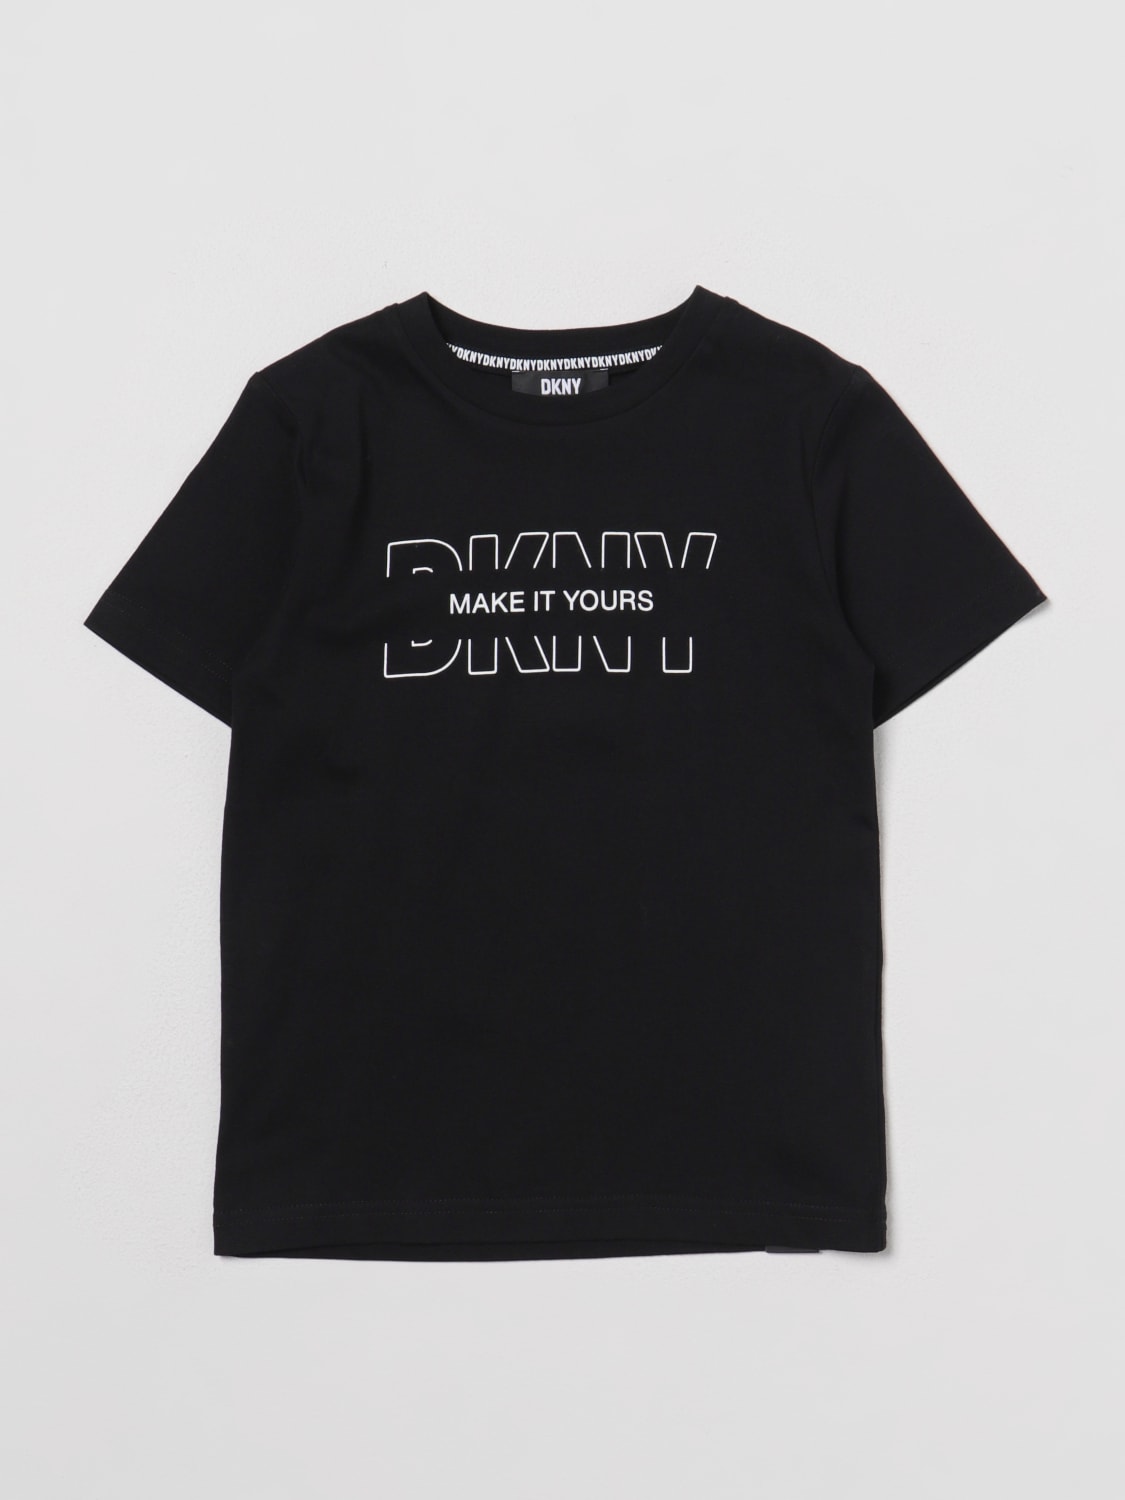 DKNY t-shirt Black for girls